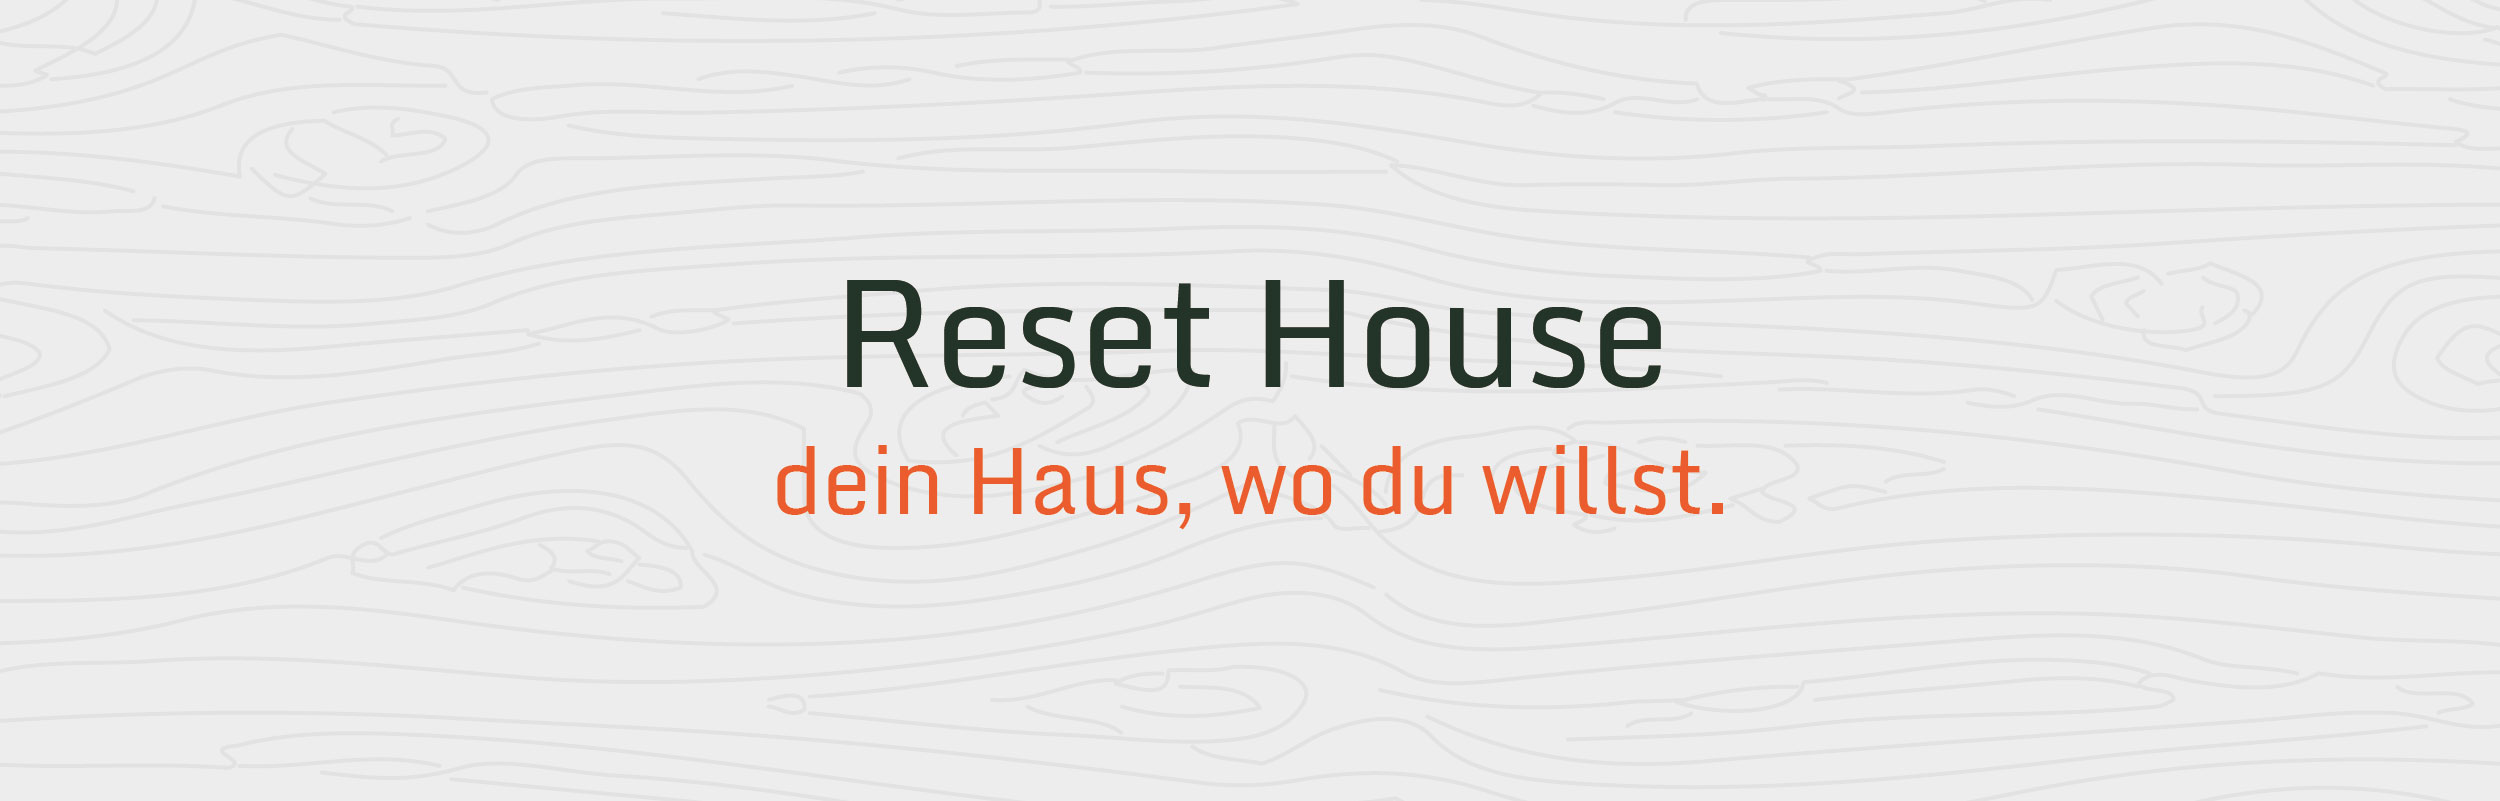 Reset House GPU Design